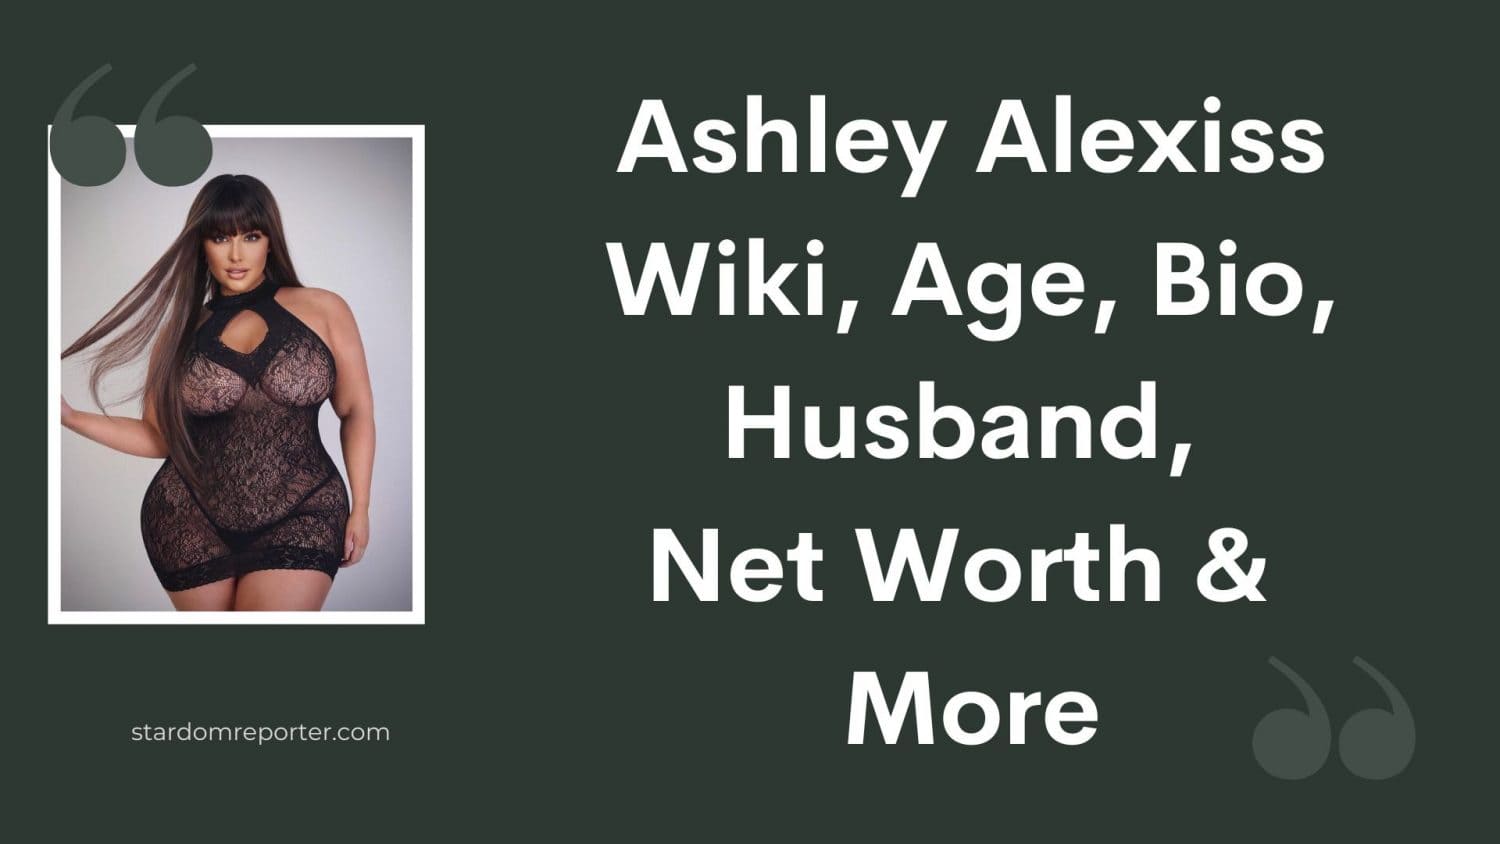 Ashley Alexiss Wiki, Age, Bio, Husband, Net Worth & More - 9